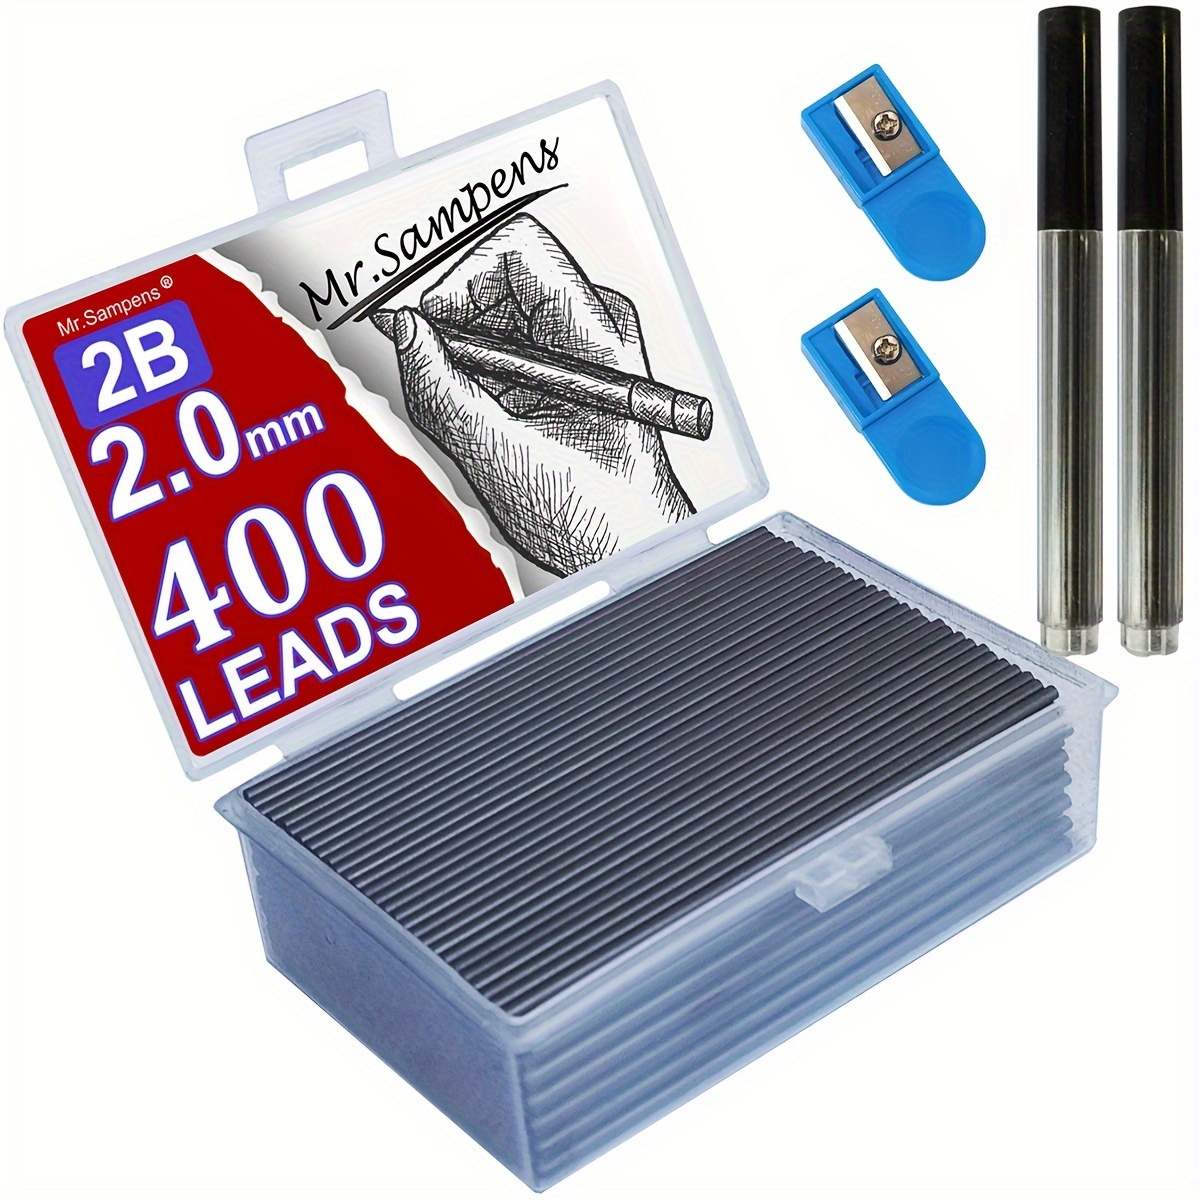 

400pcs 2.0mm 2b Automatic Pencil Refills 2.0mm Movable Lead Resin Lead Refills 2.0 Refills Wholesale